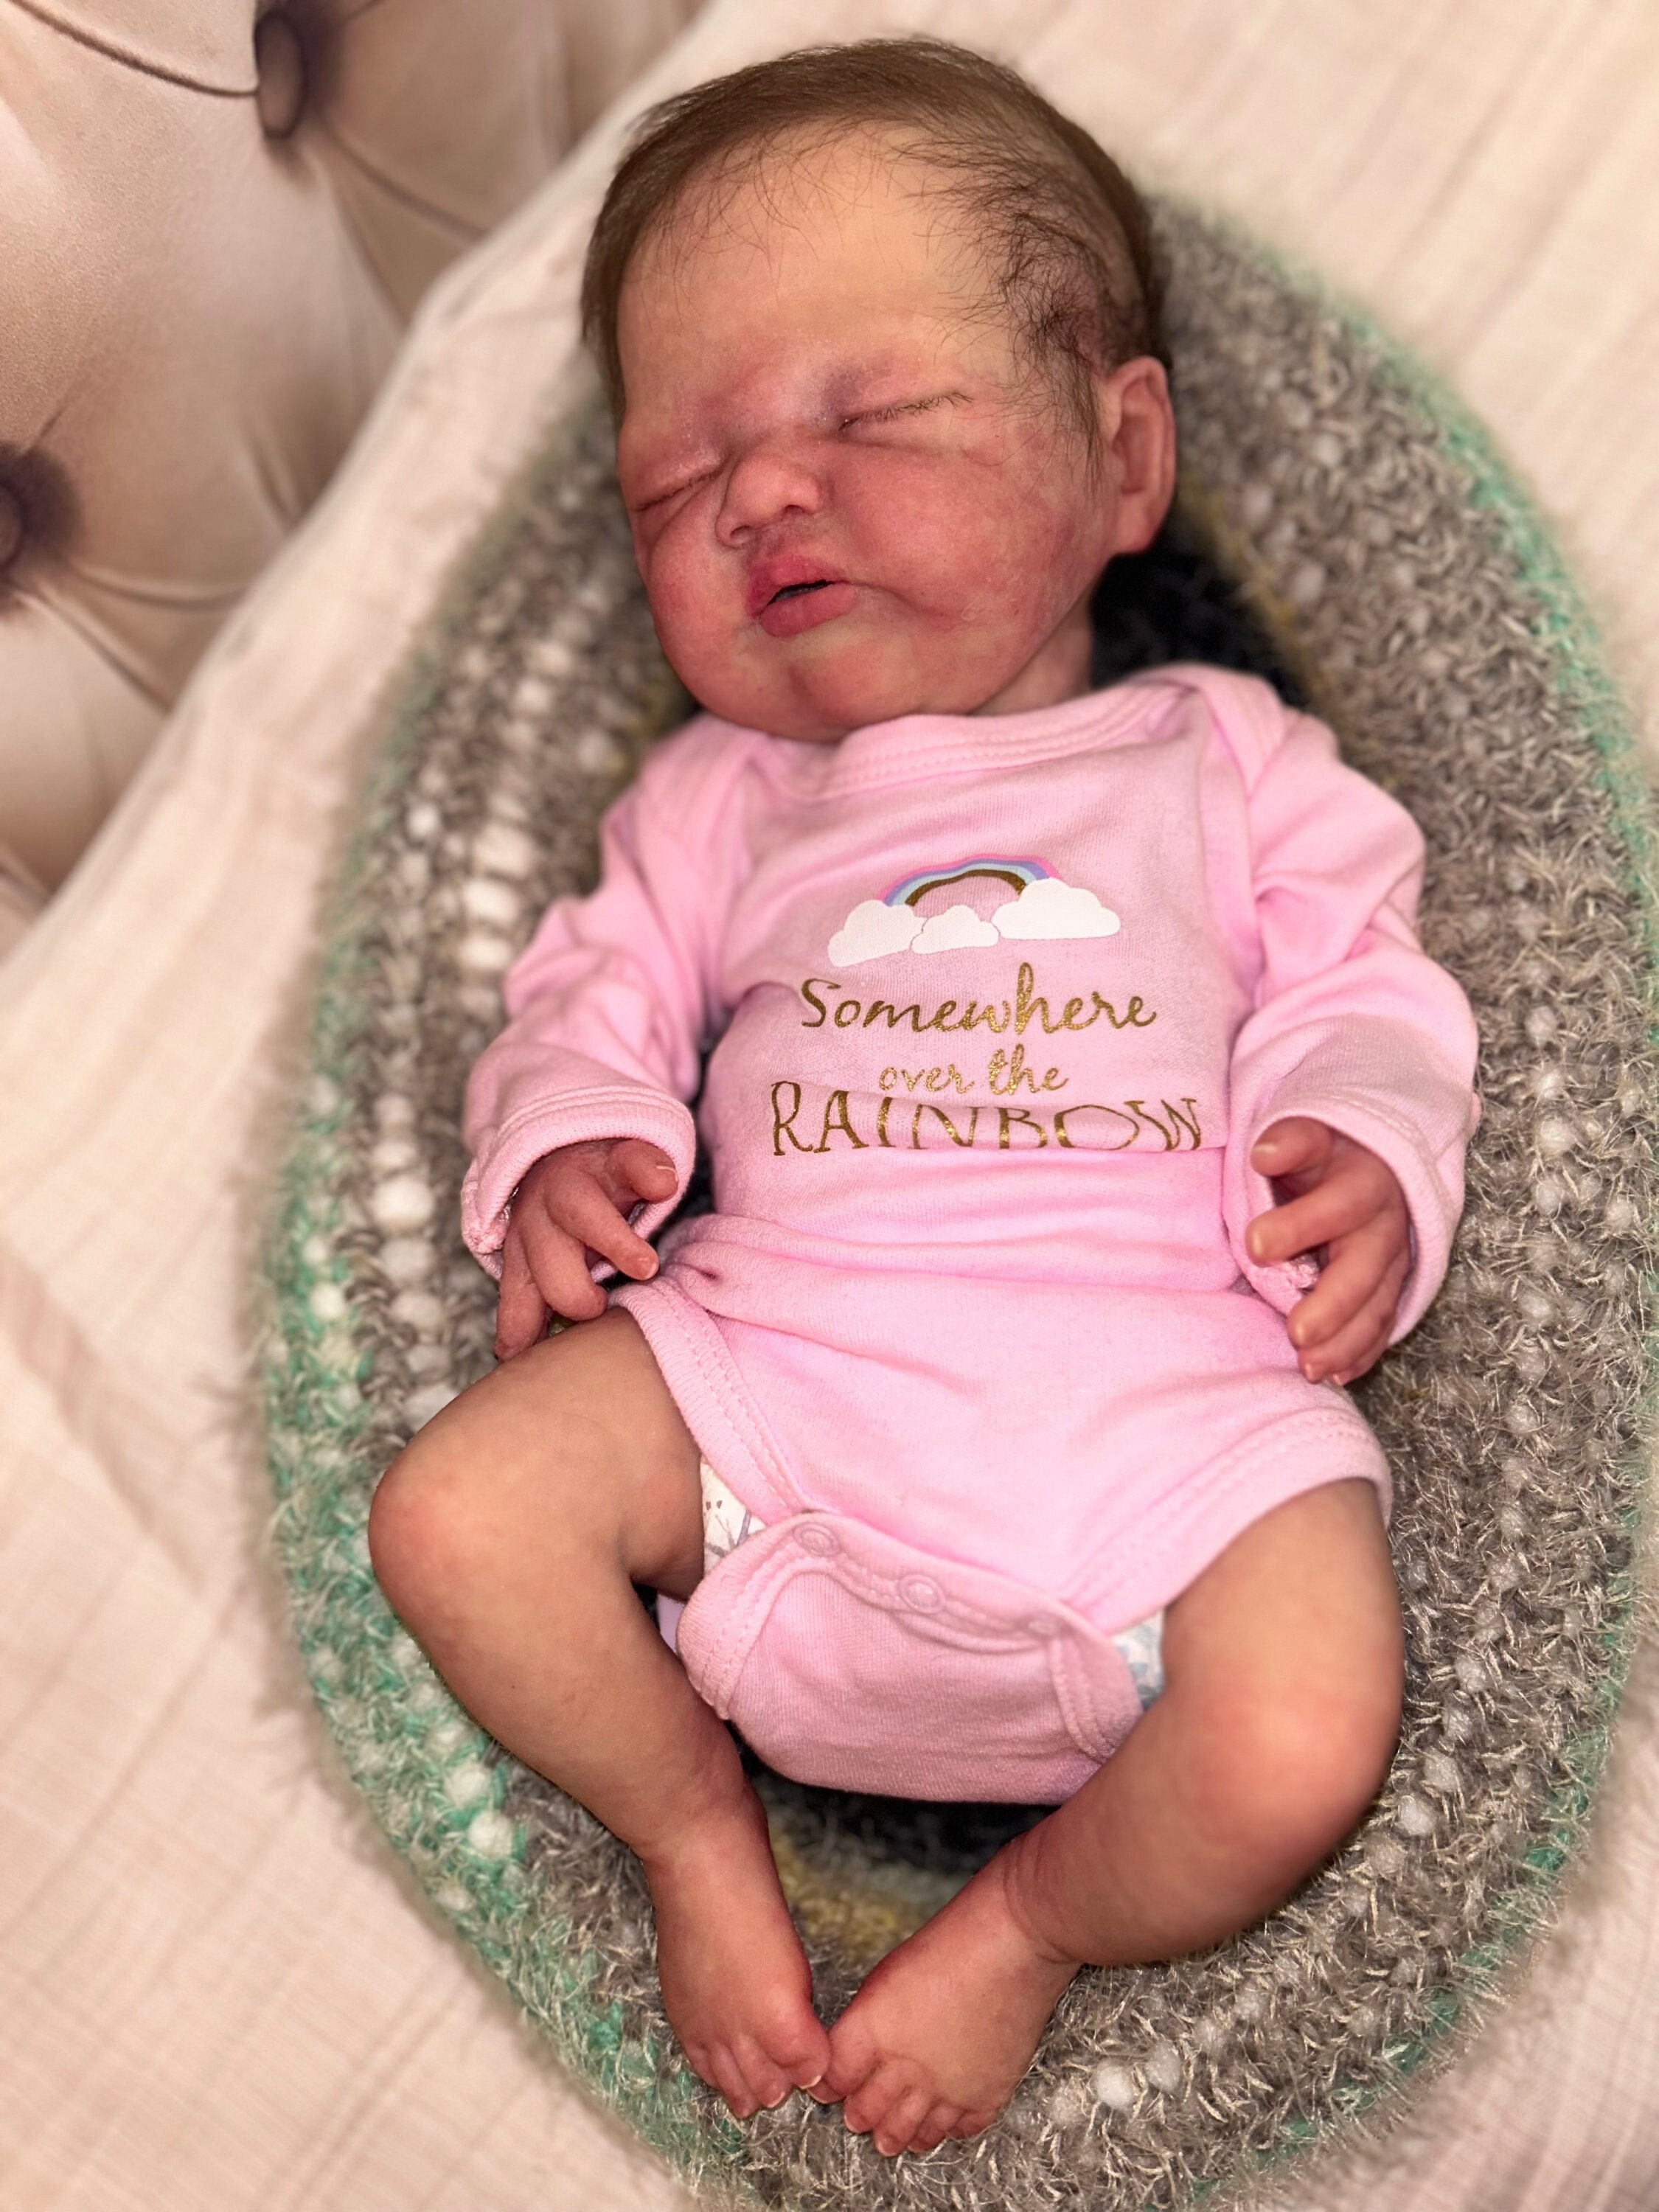 Realborn® Patience Awake (21 Reborn Doll Kit) - Bountiful Baby